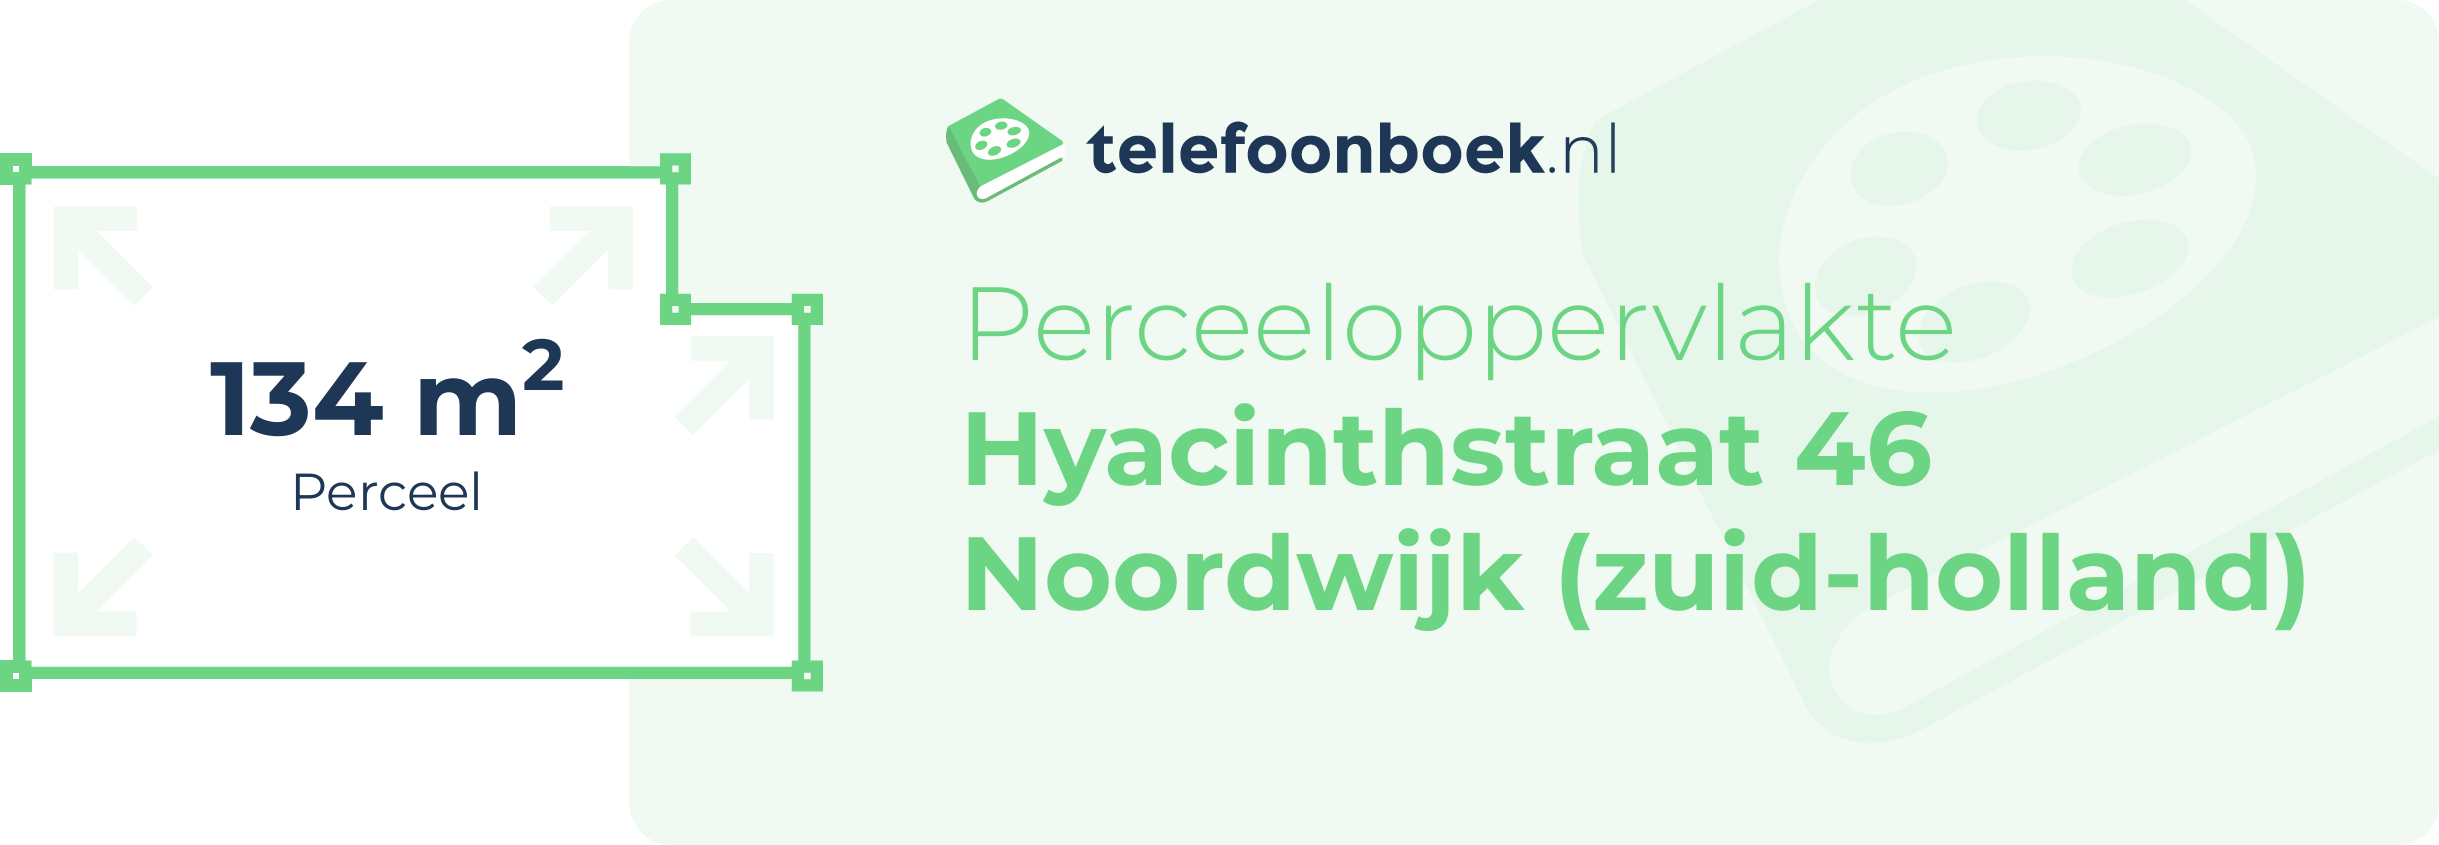 Perceeloppervlakte Hyacinthstraat 46 Noordwijk (Zuid-Holland)